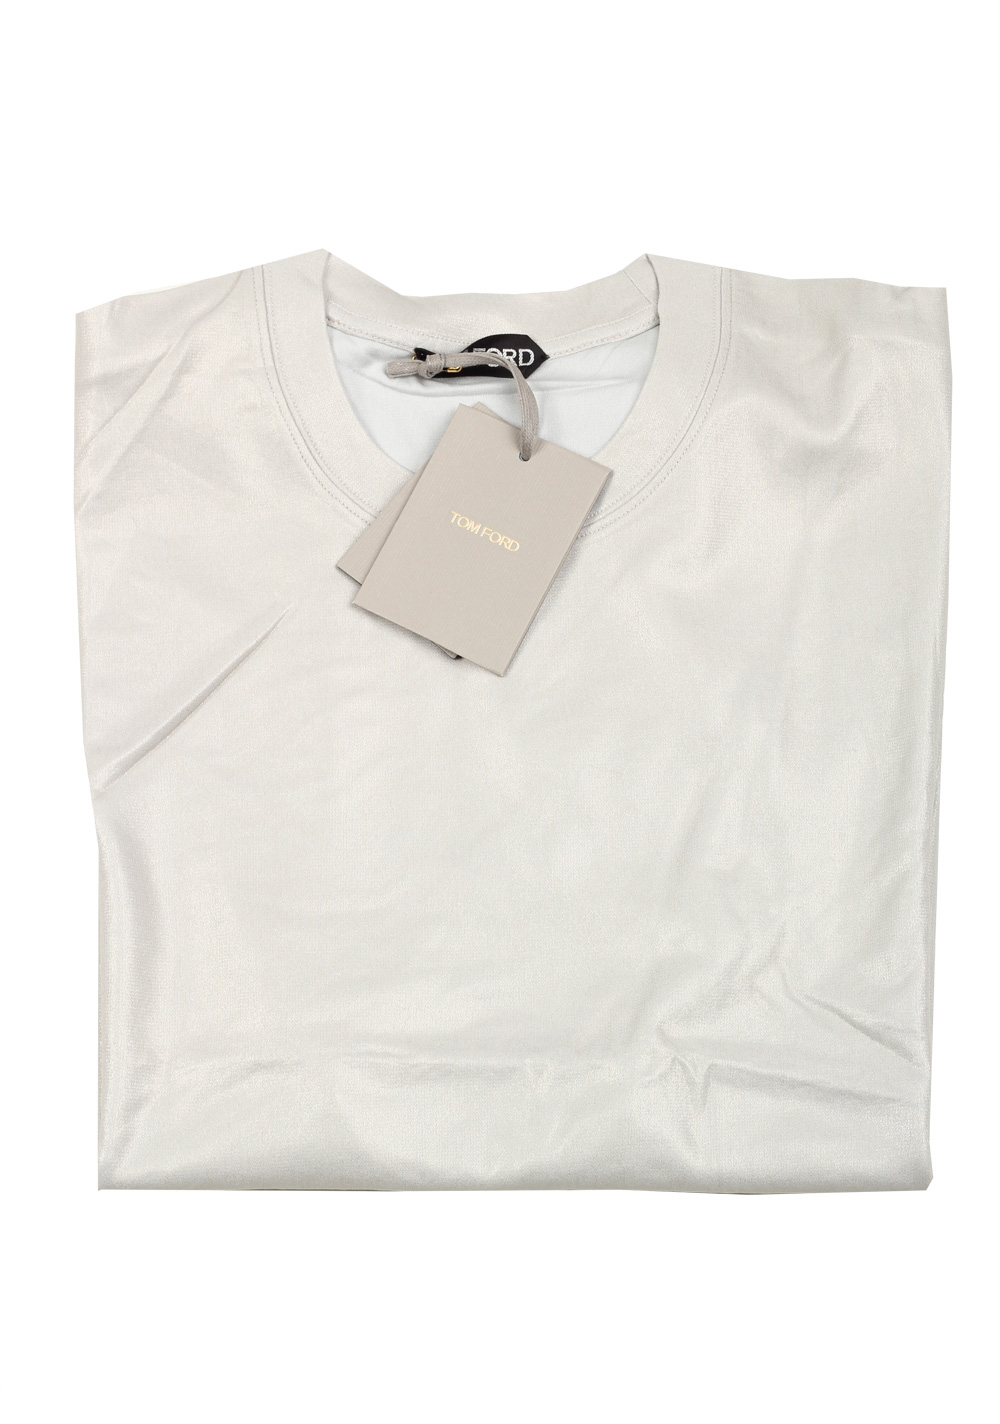 TOM FORD Gray Tee Shirt Size 48 / 38R U.S. | Costume Limité